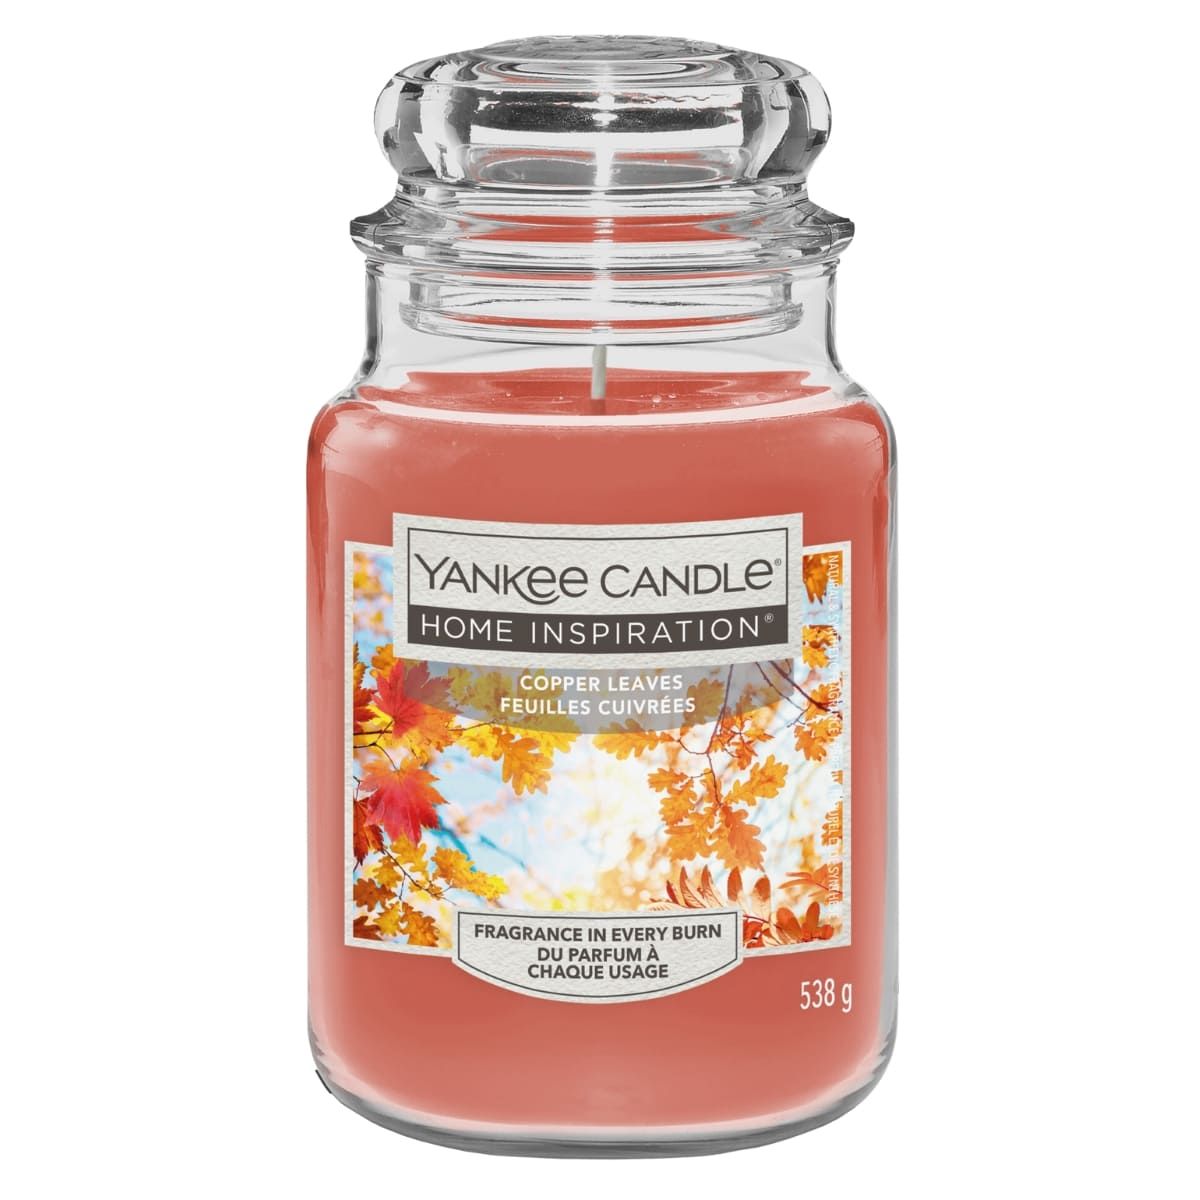 Ароматическая Свеча Yankee Candle Home Inspiration Copper Leaves, 538 гр ароматическая свеча большая village candle tropical getaway 538 гр